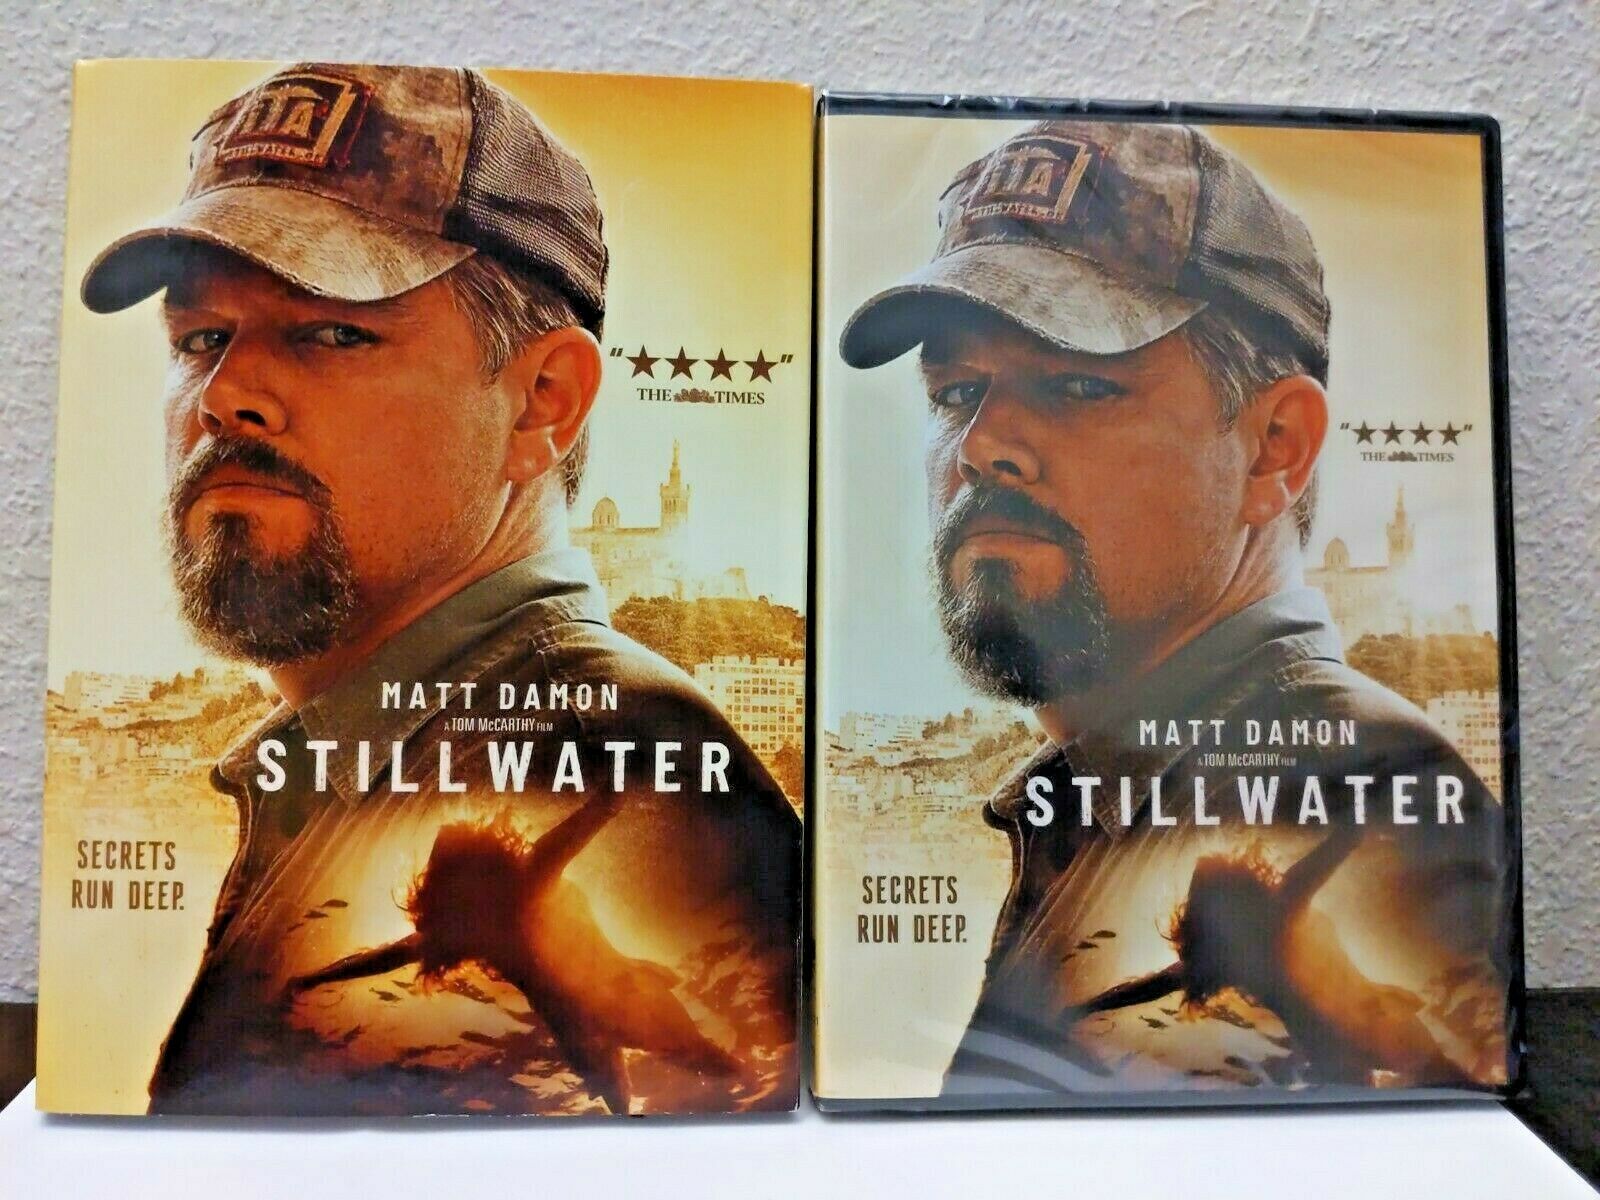 Stillwater Movie Poster Wallpapers